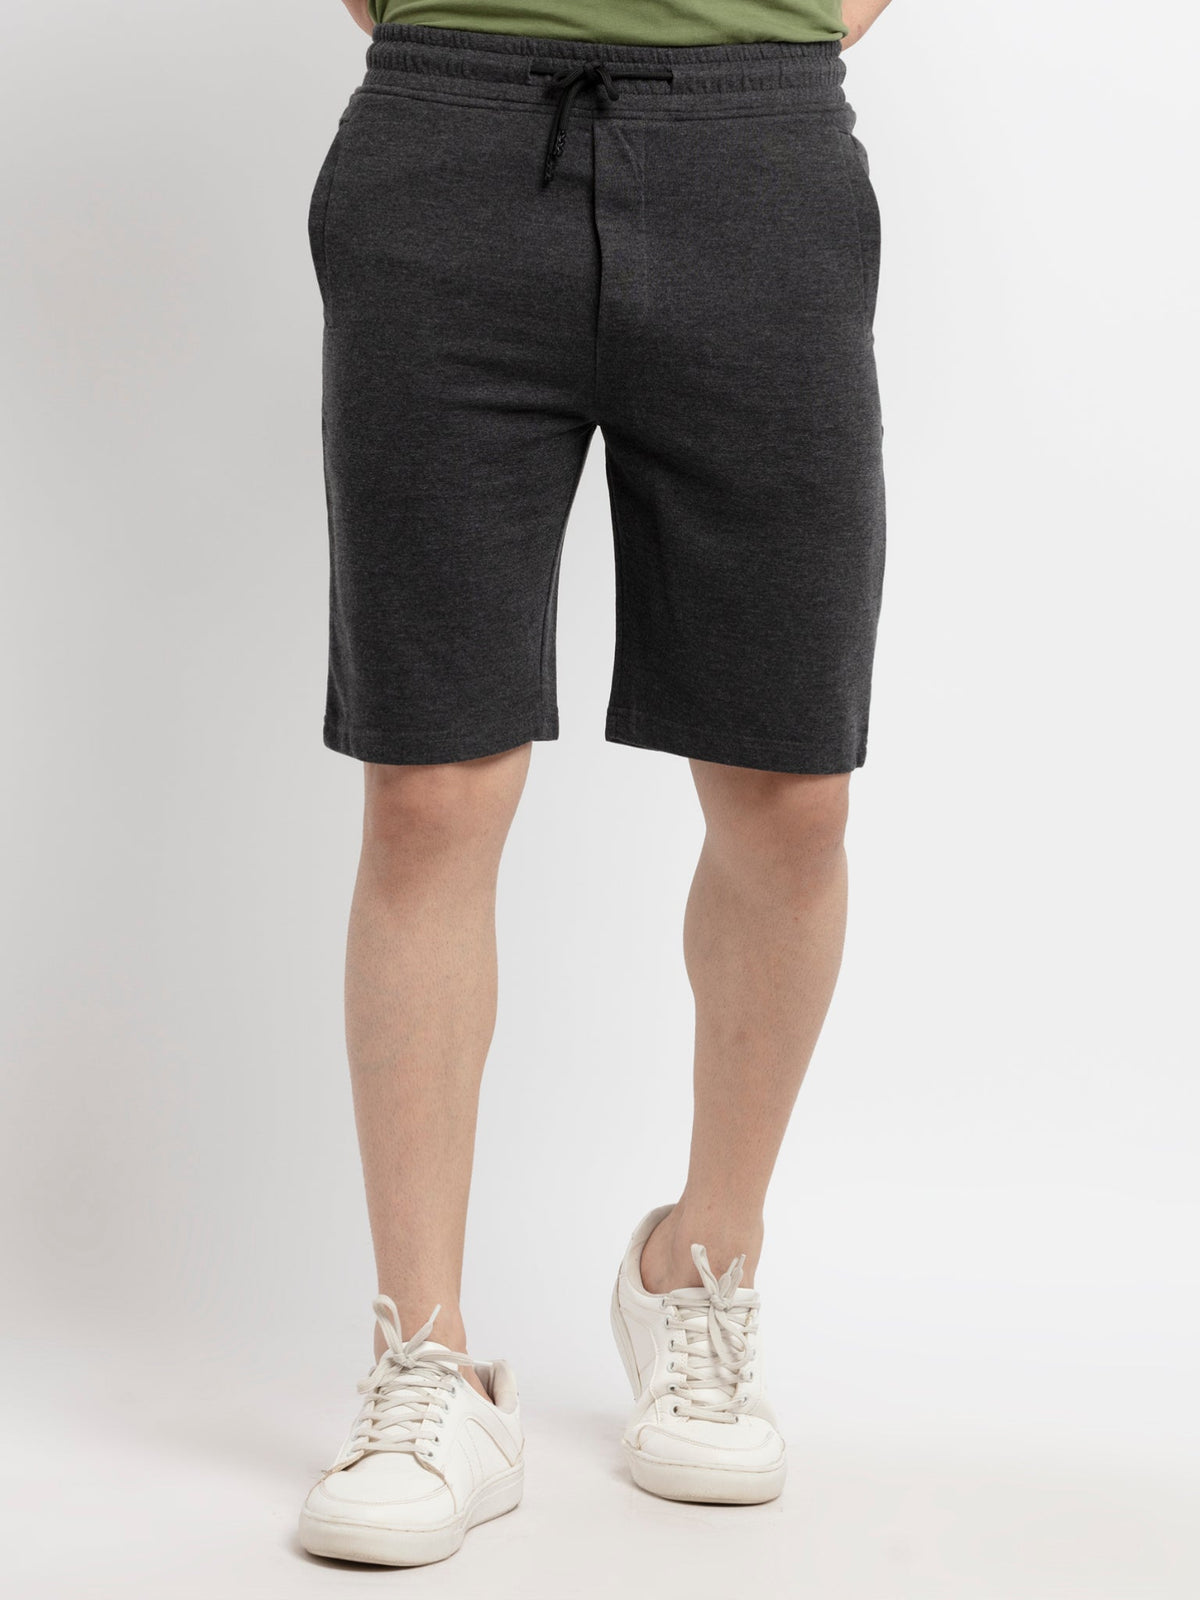 Status Quo |Men's Solid Regular Fit Shorts - S, M, L, XL, XXL